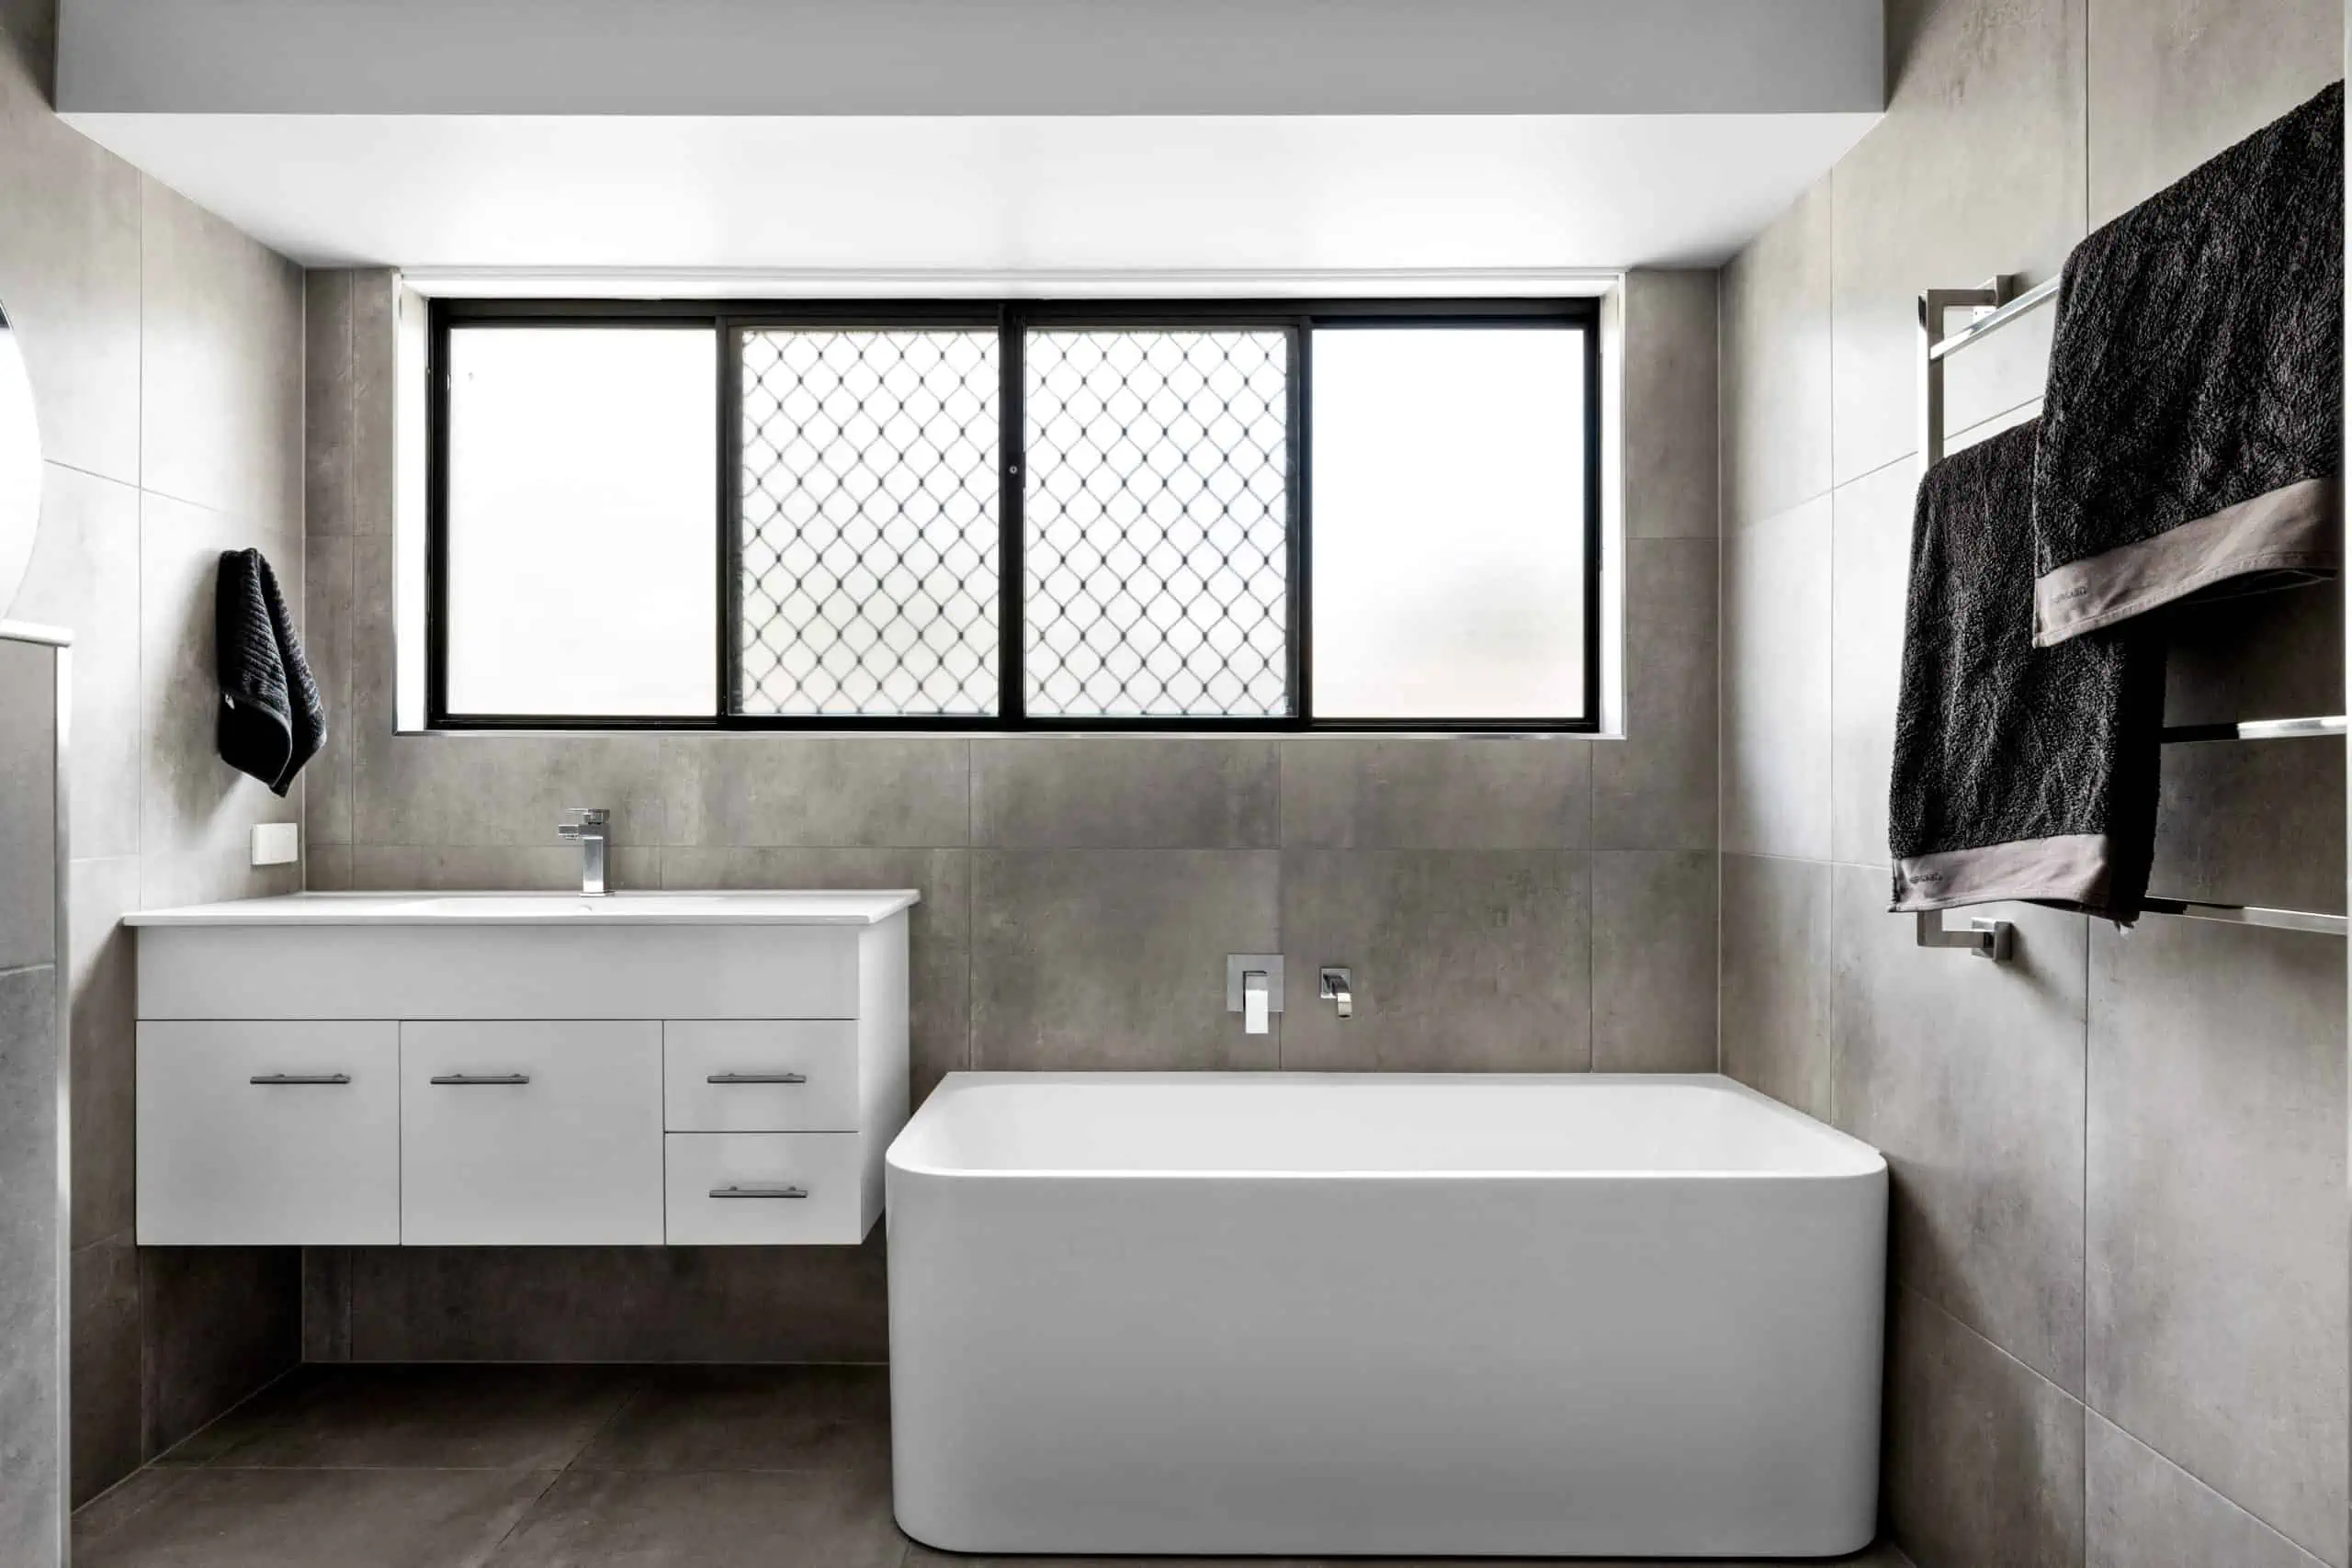 White bath and vanity in a modern bathroom